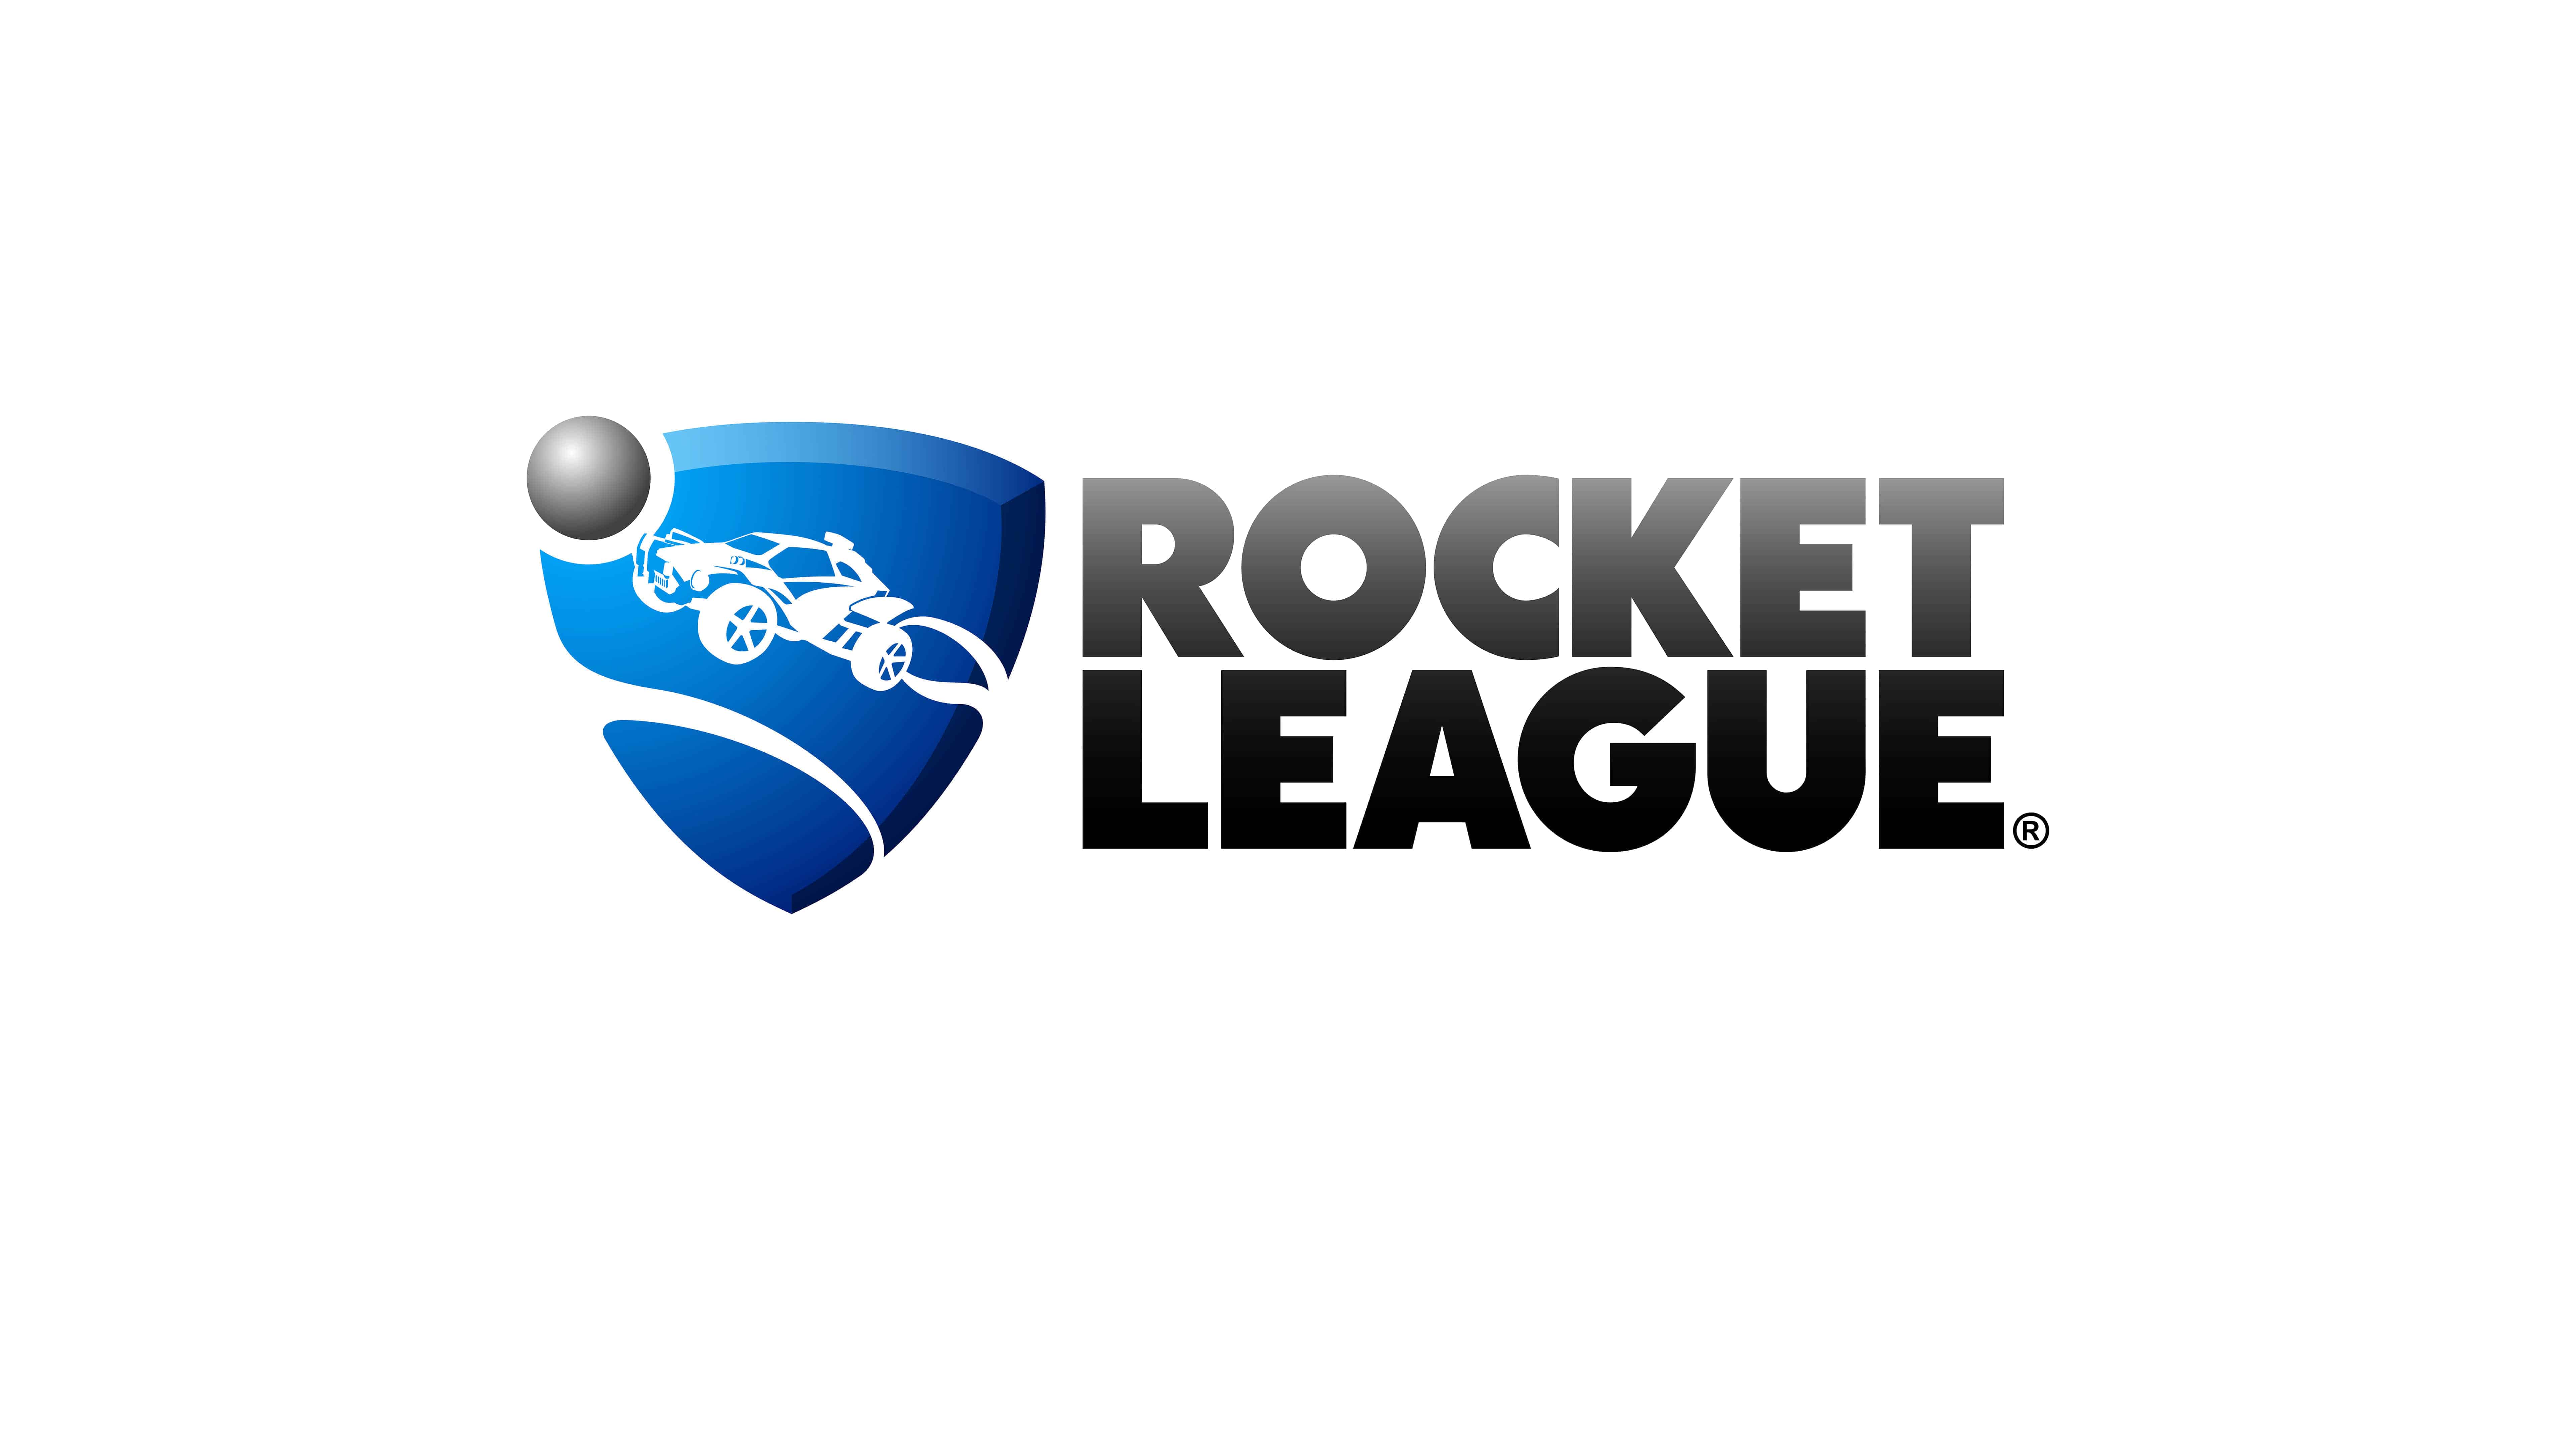 2d rocket league logo rocket league logo